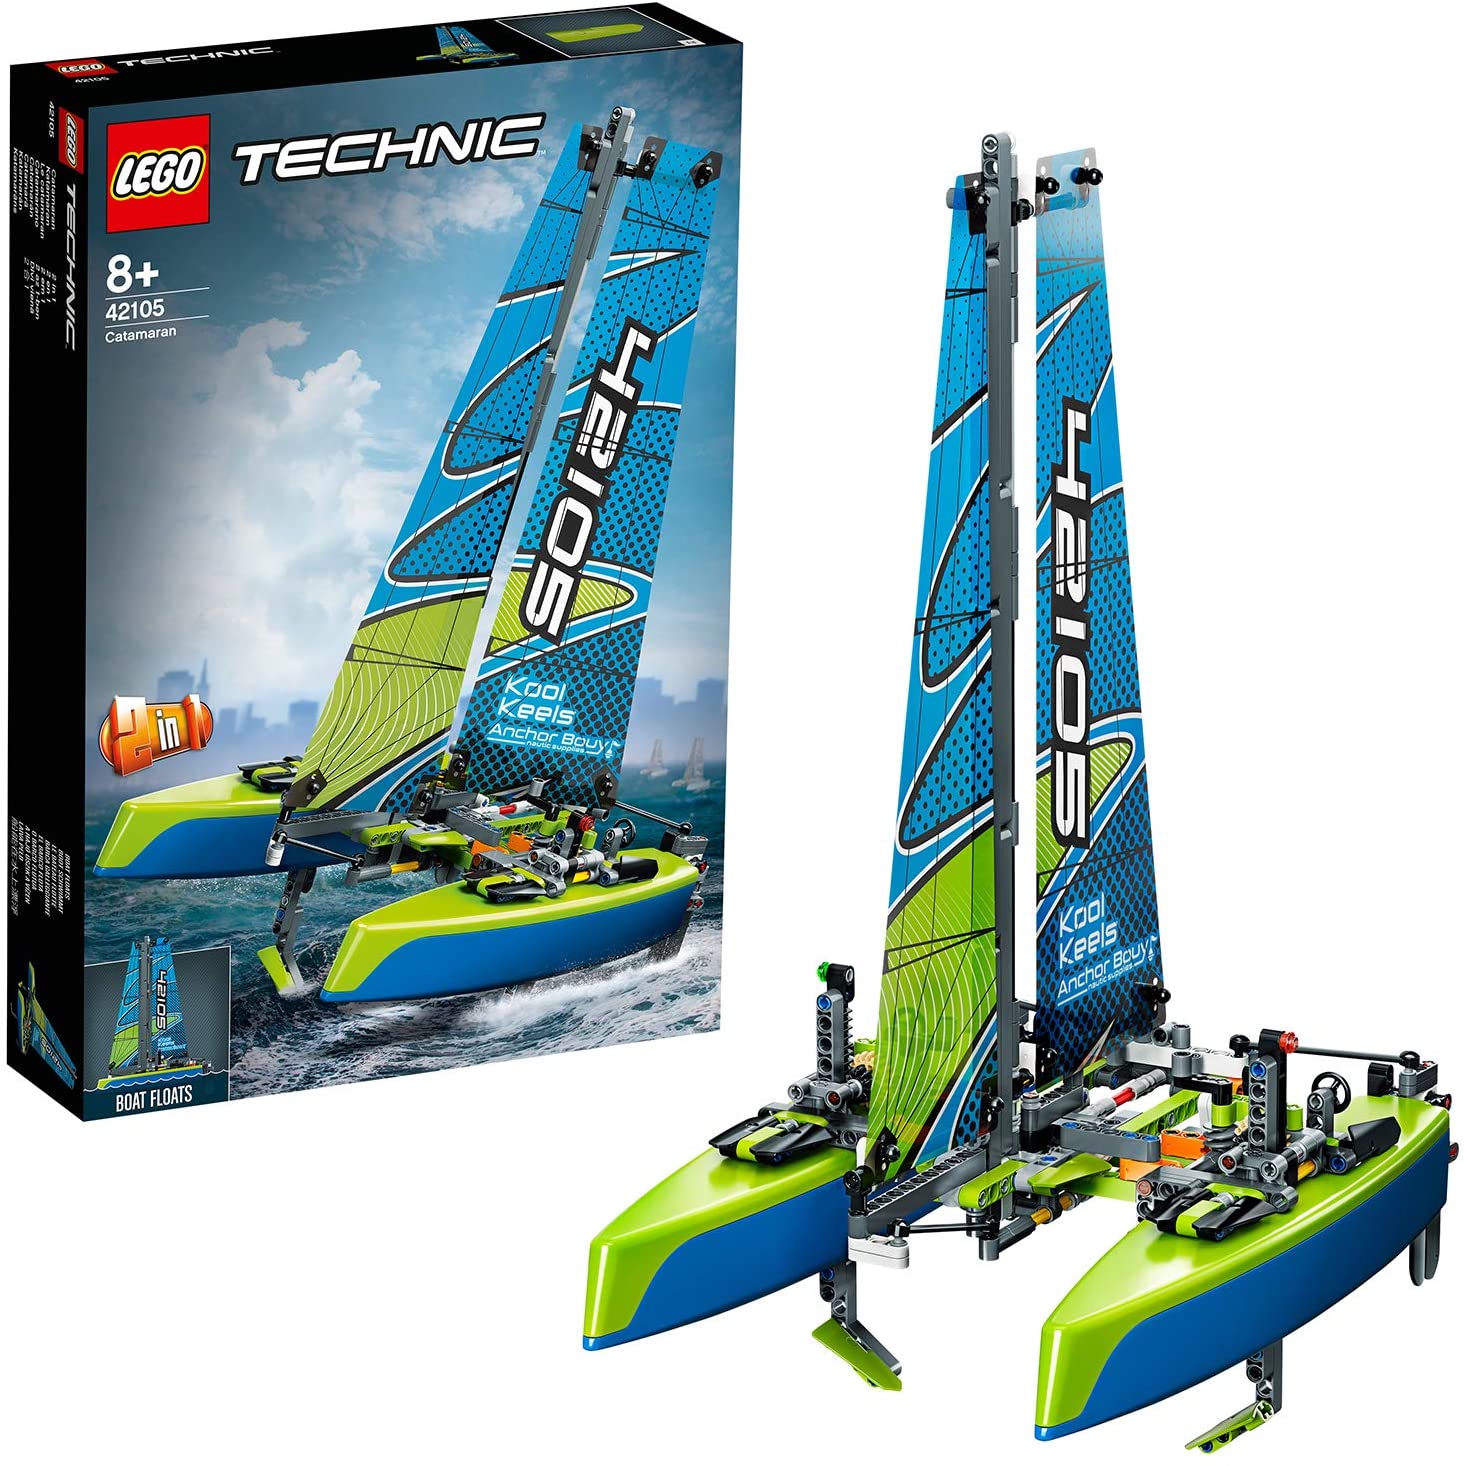 Lego ® Technic ™ 42105 Catamaran Childrens Building Kit